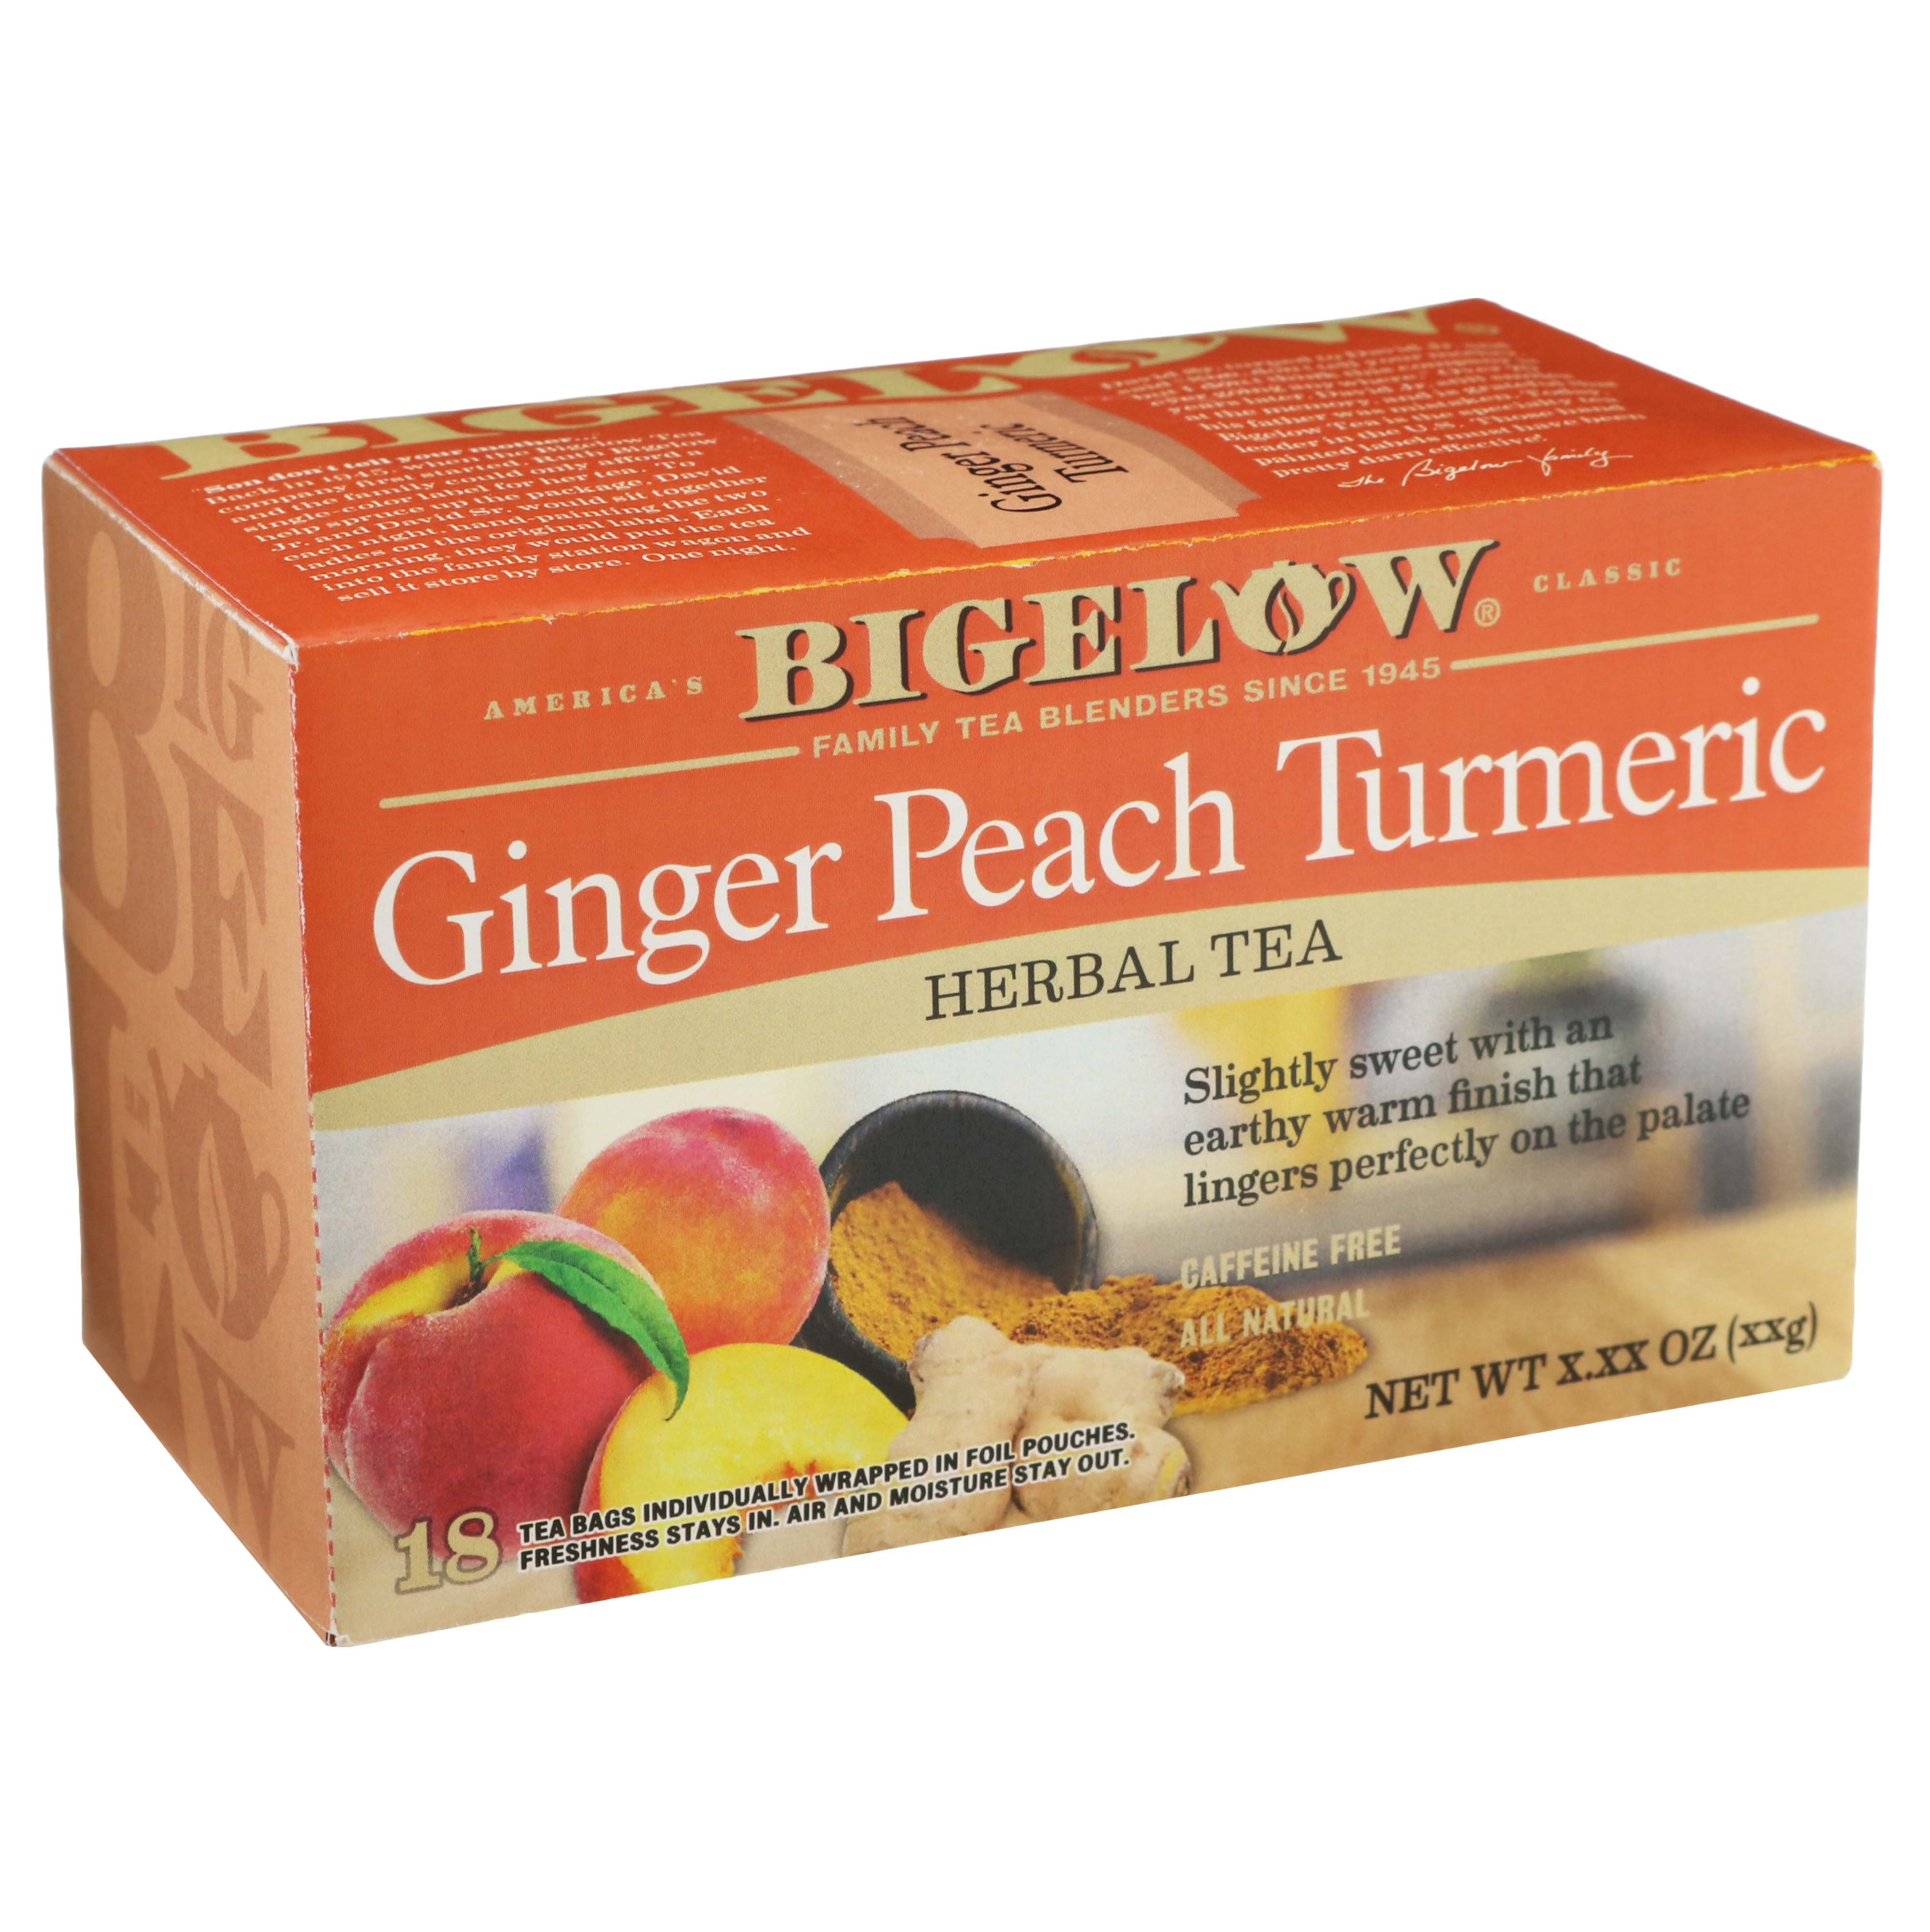 Bigelow Benefits Calm Stomach Ginger Peach Herbal Tea, 18 Tea Bags